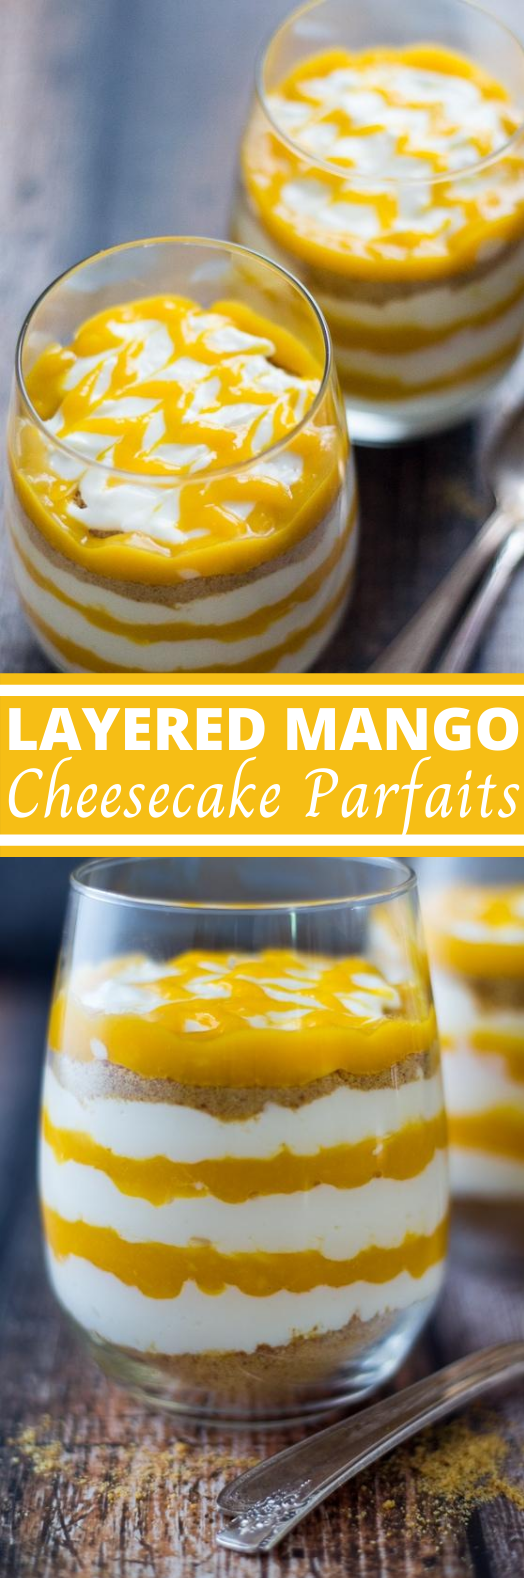 5 Ingredient Layered Mango Cheesecake Parfaits #easy #dessert #nobake #cheesecake #party